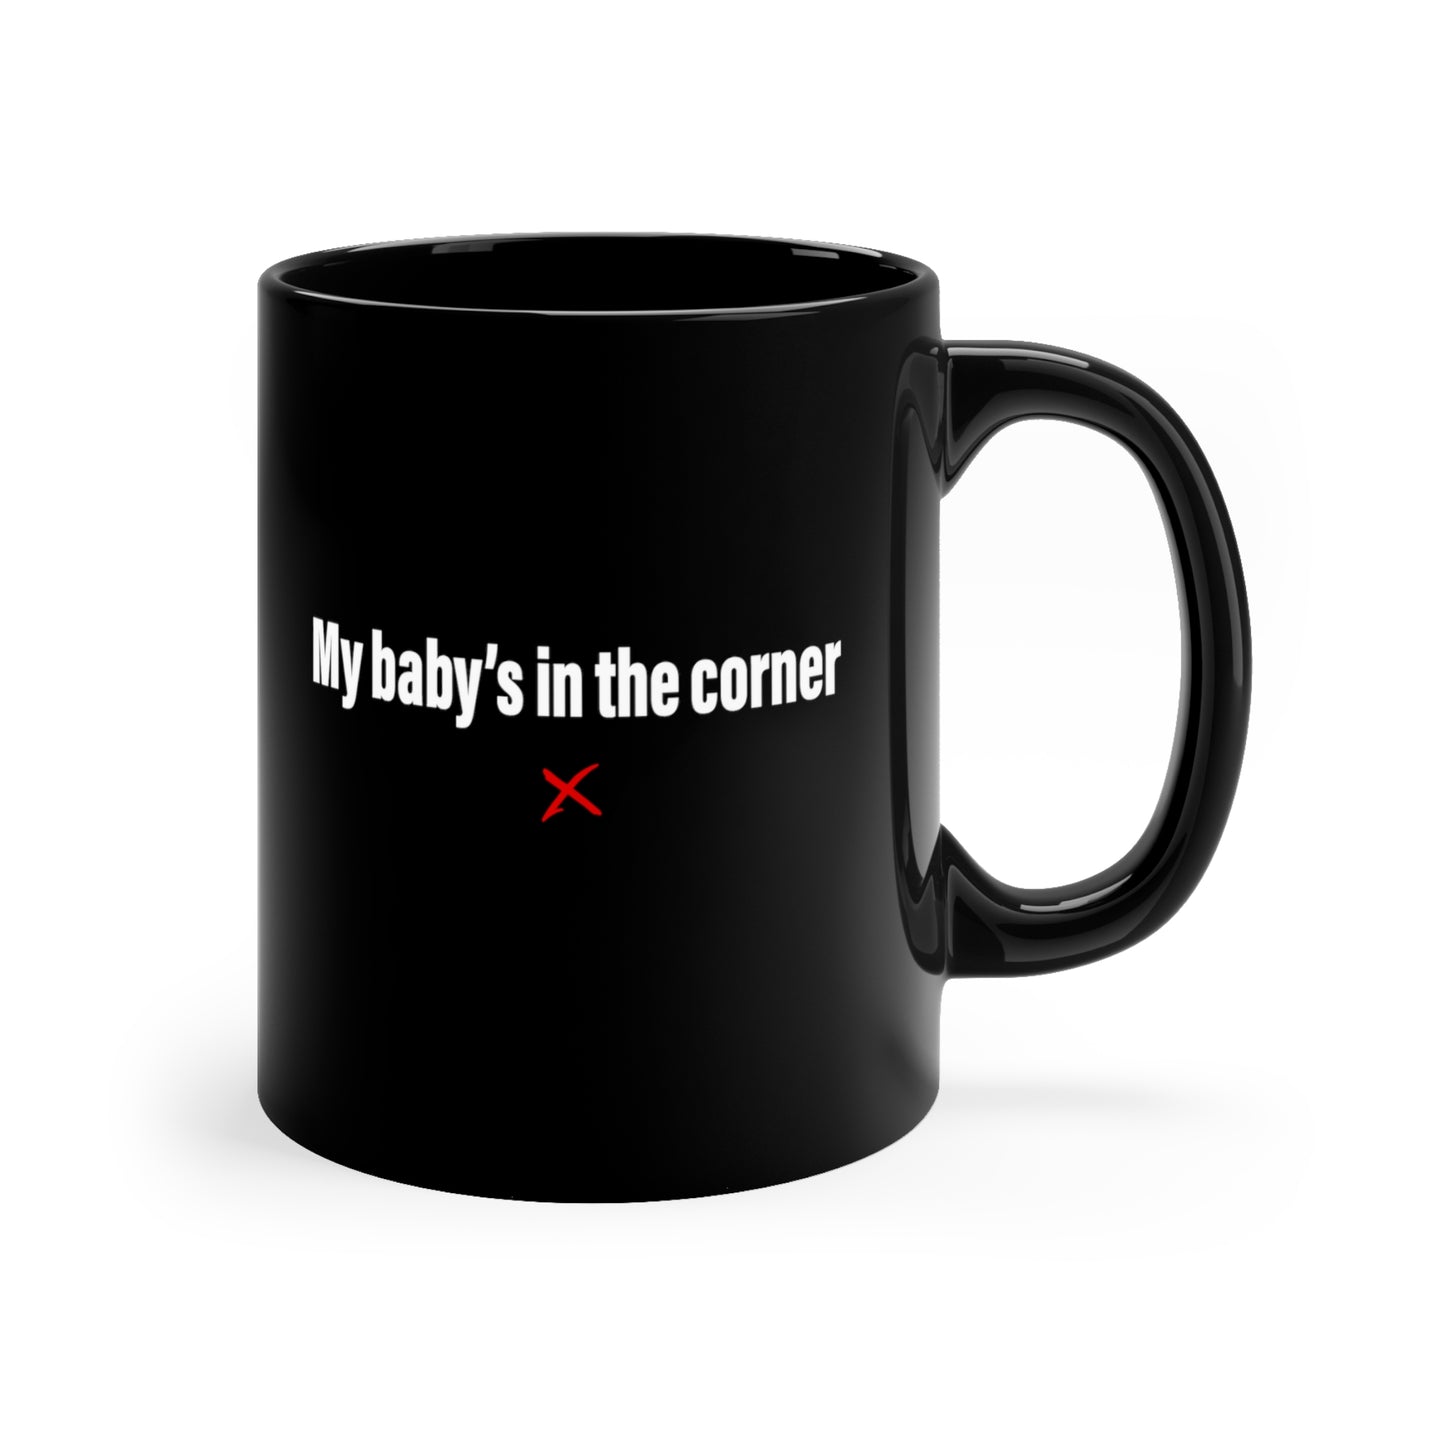 My baby's in the corner - Mug